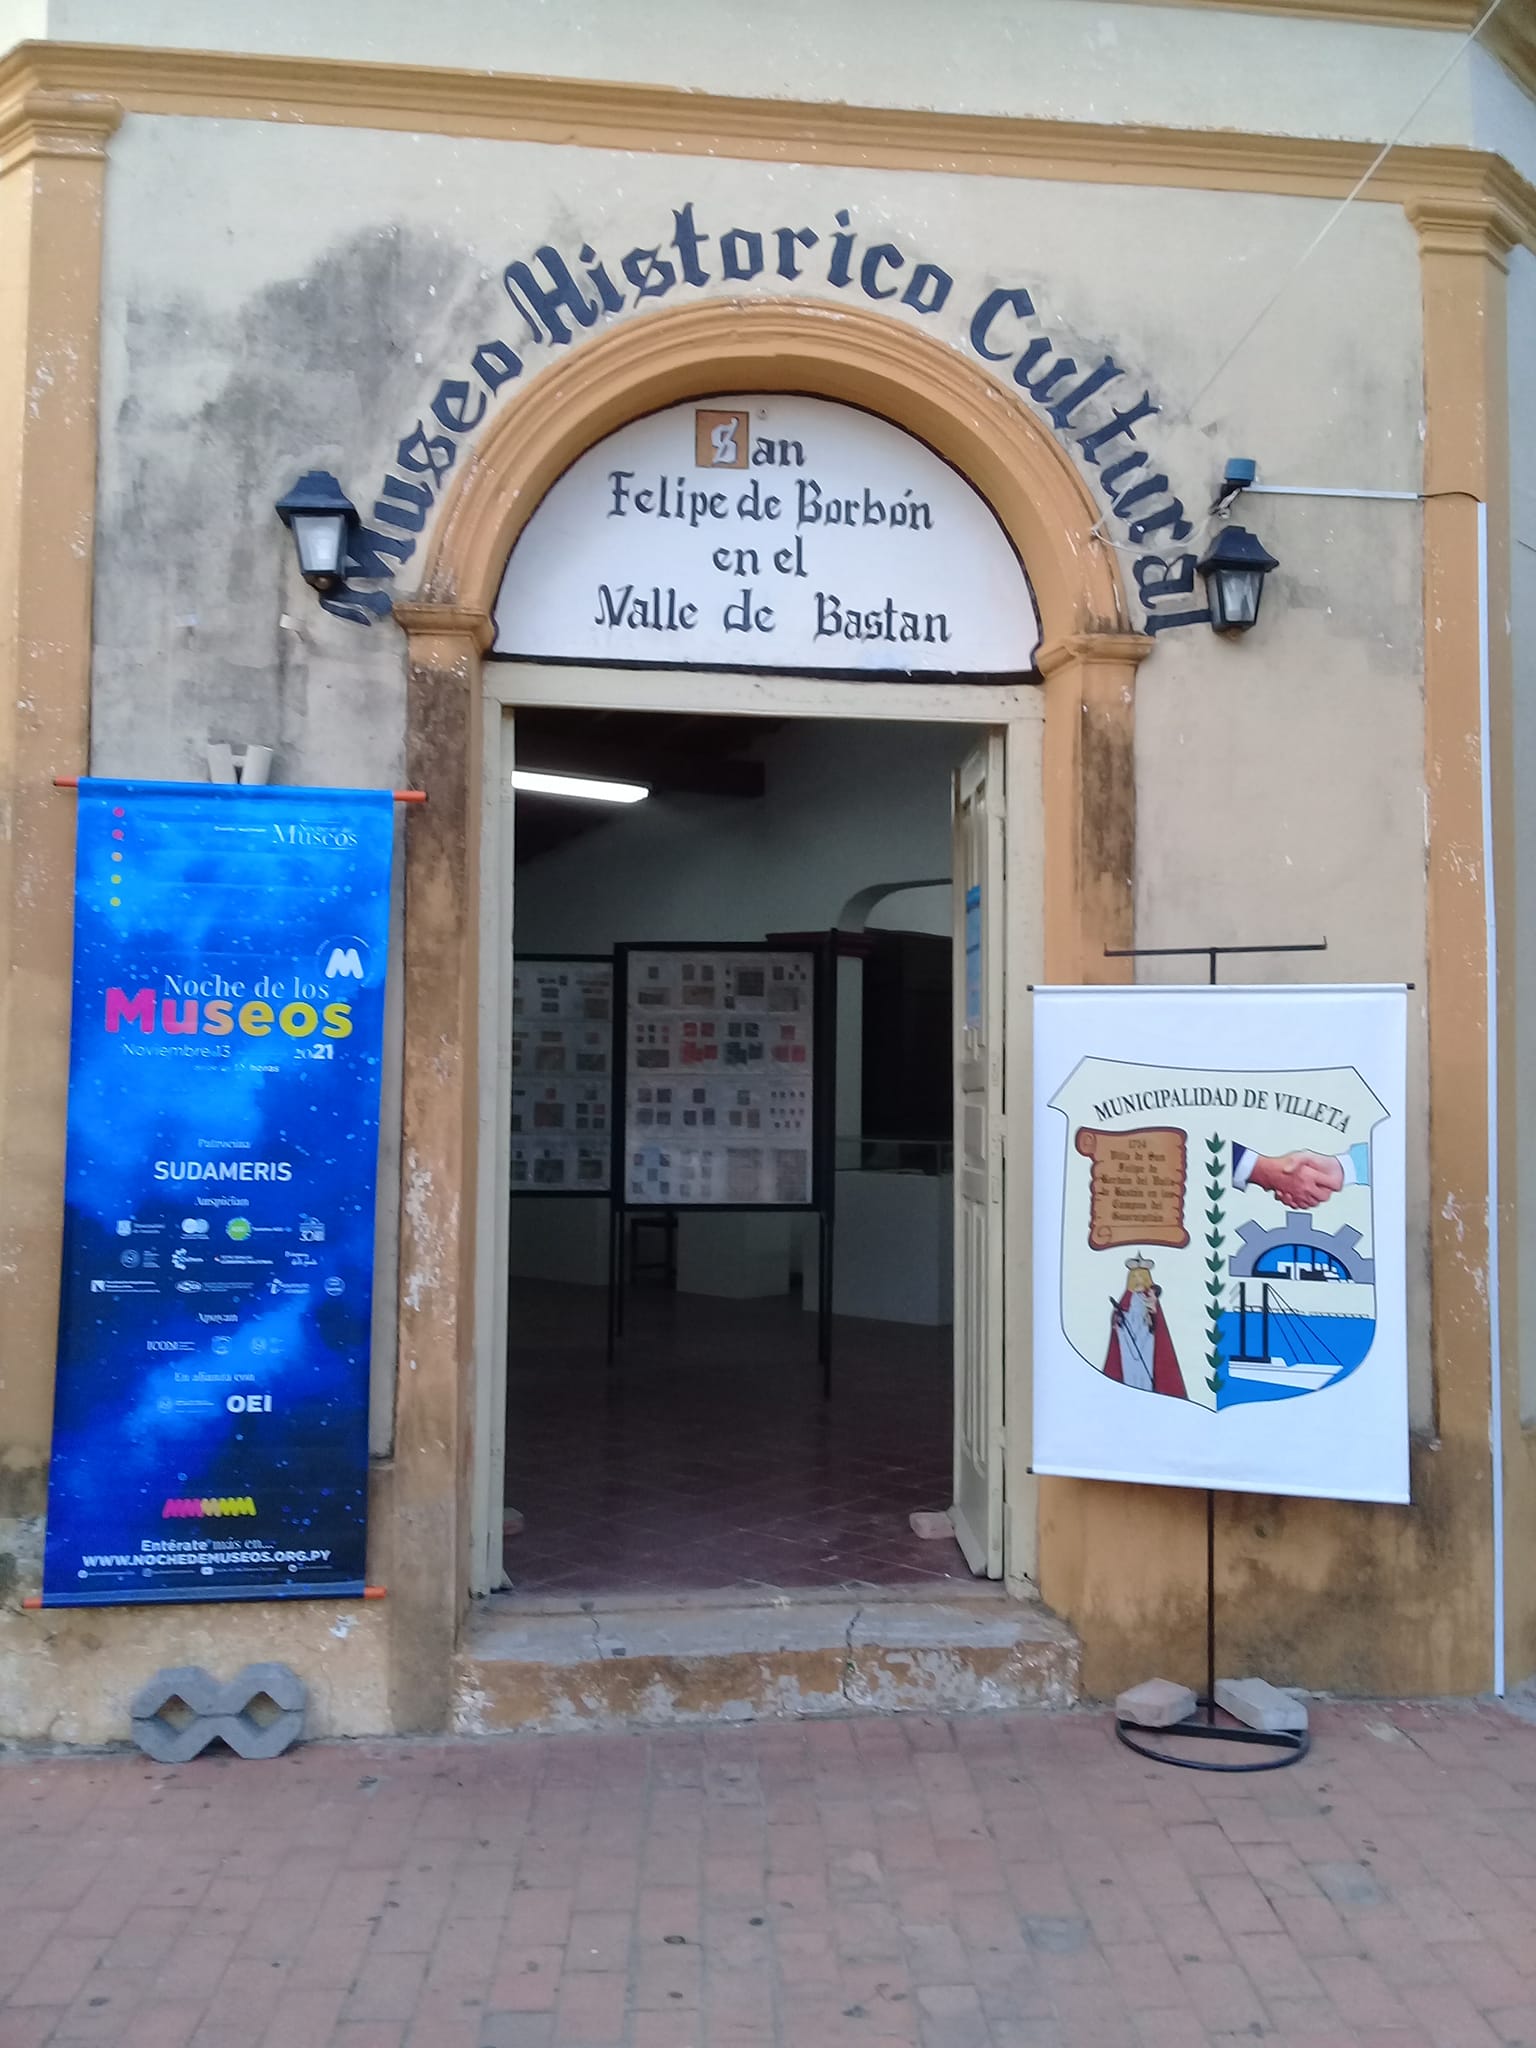 Museo Histórico Cultural del Distrito de Villeta